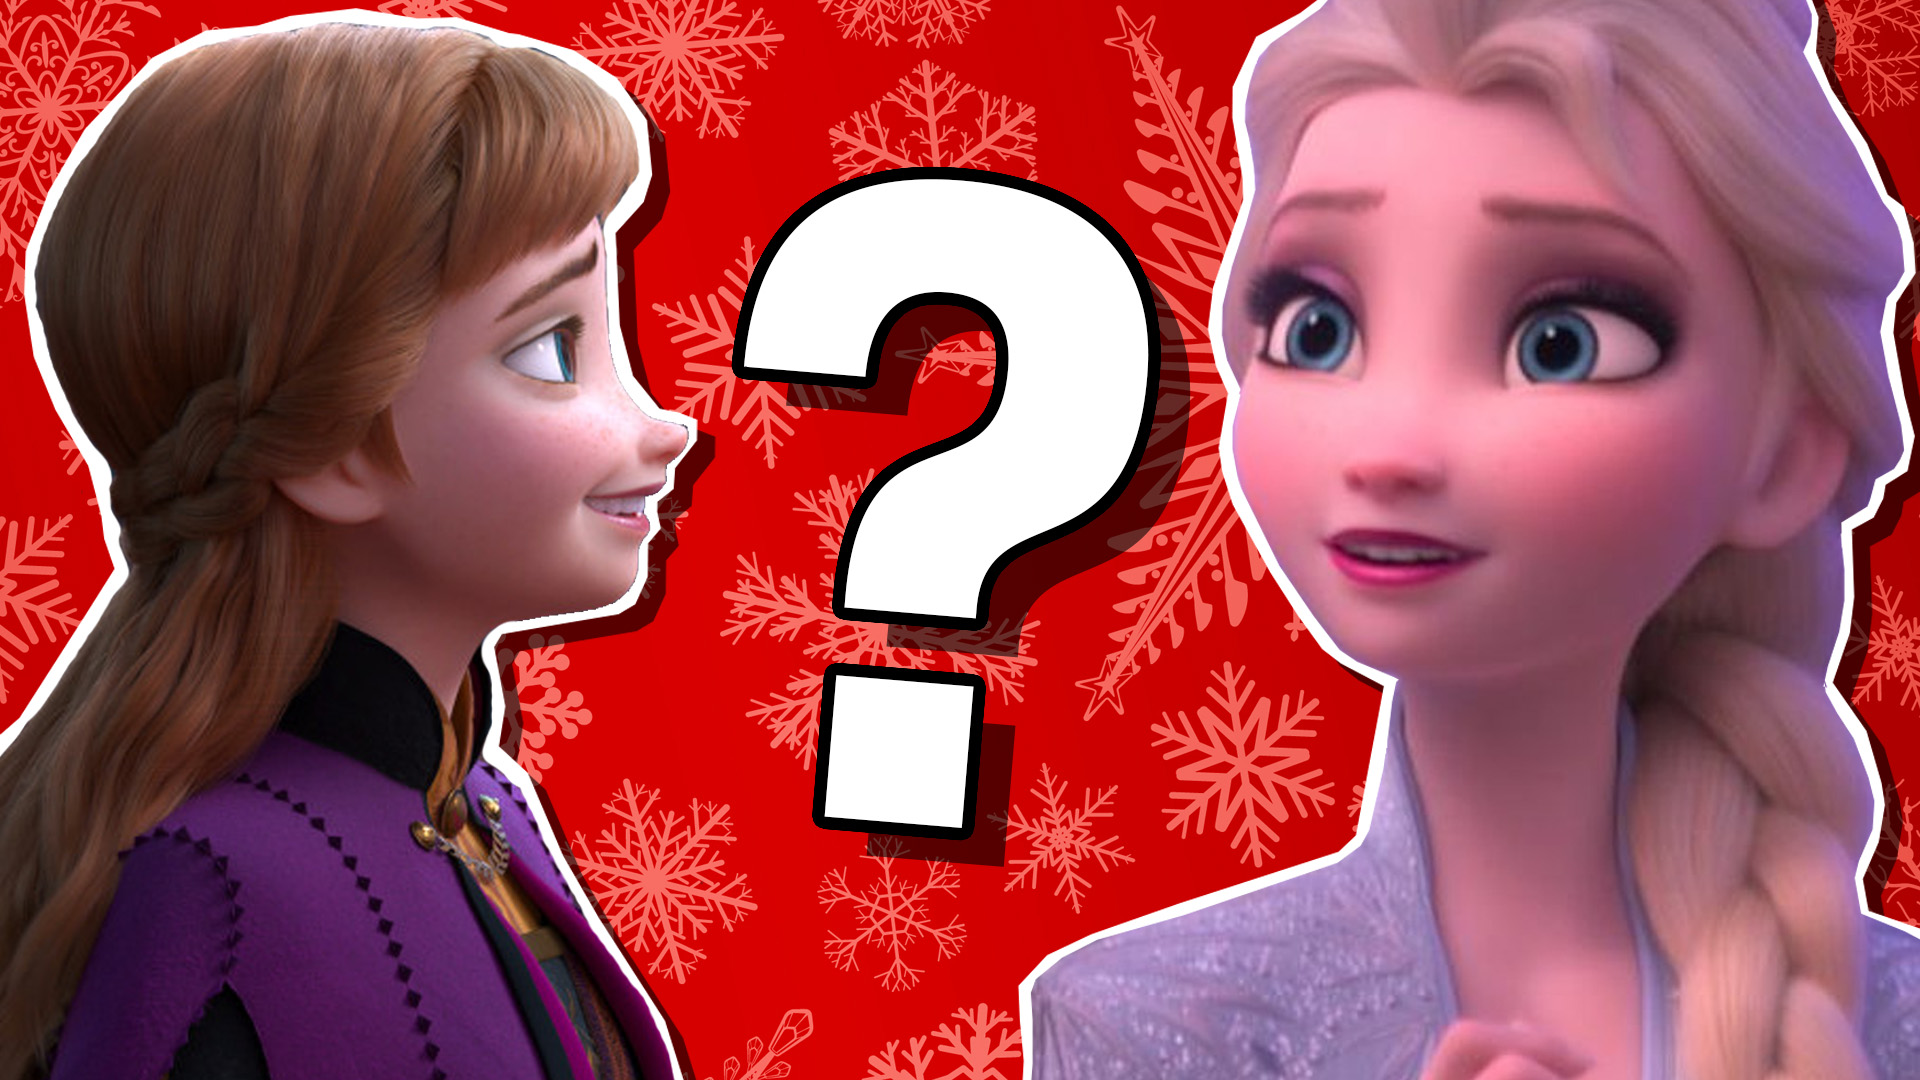 Frozen 2 quiz featuring Anna and Elsa